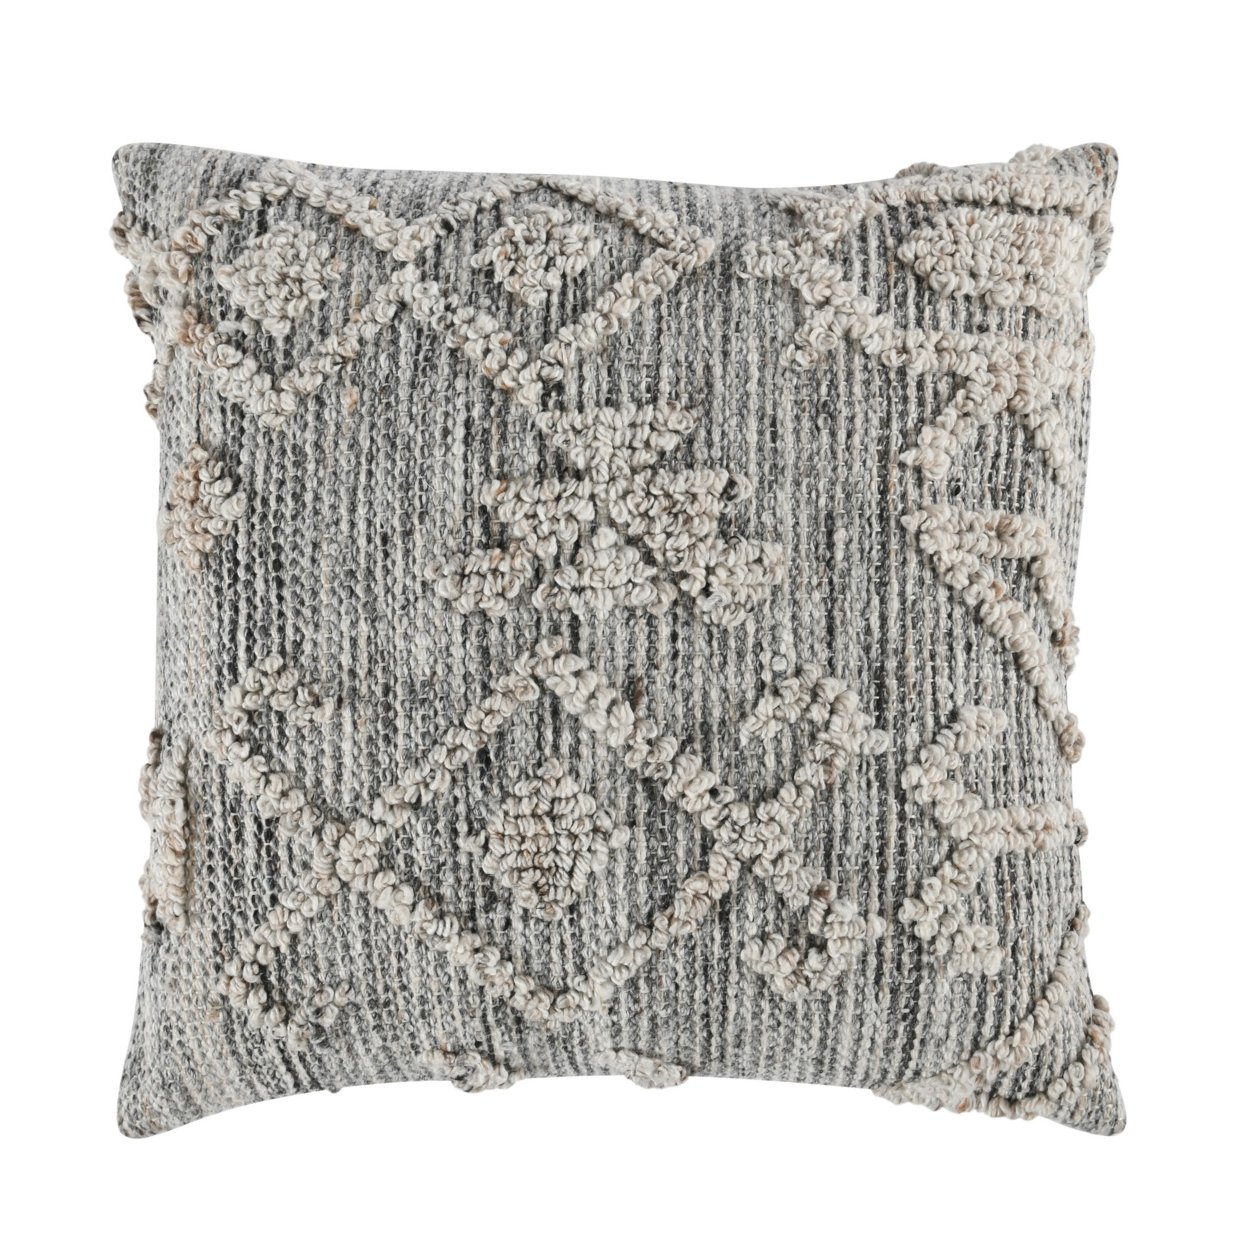 Jai 22 X 22 Outdoor Accent Throw Pillow, Handwoven Design, Gray Polyester- Saltoro Sherpi